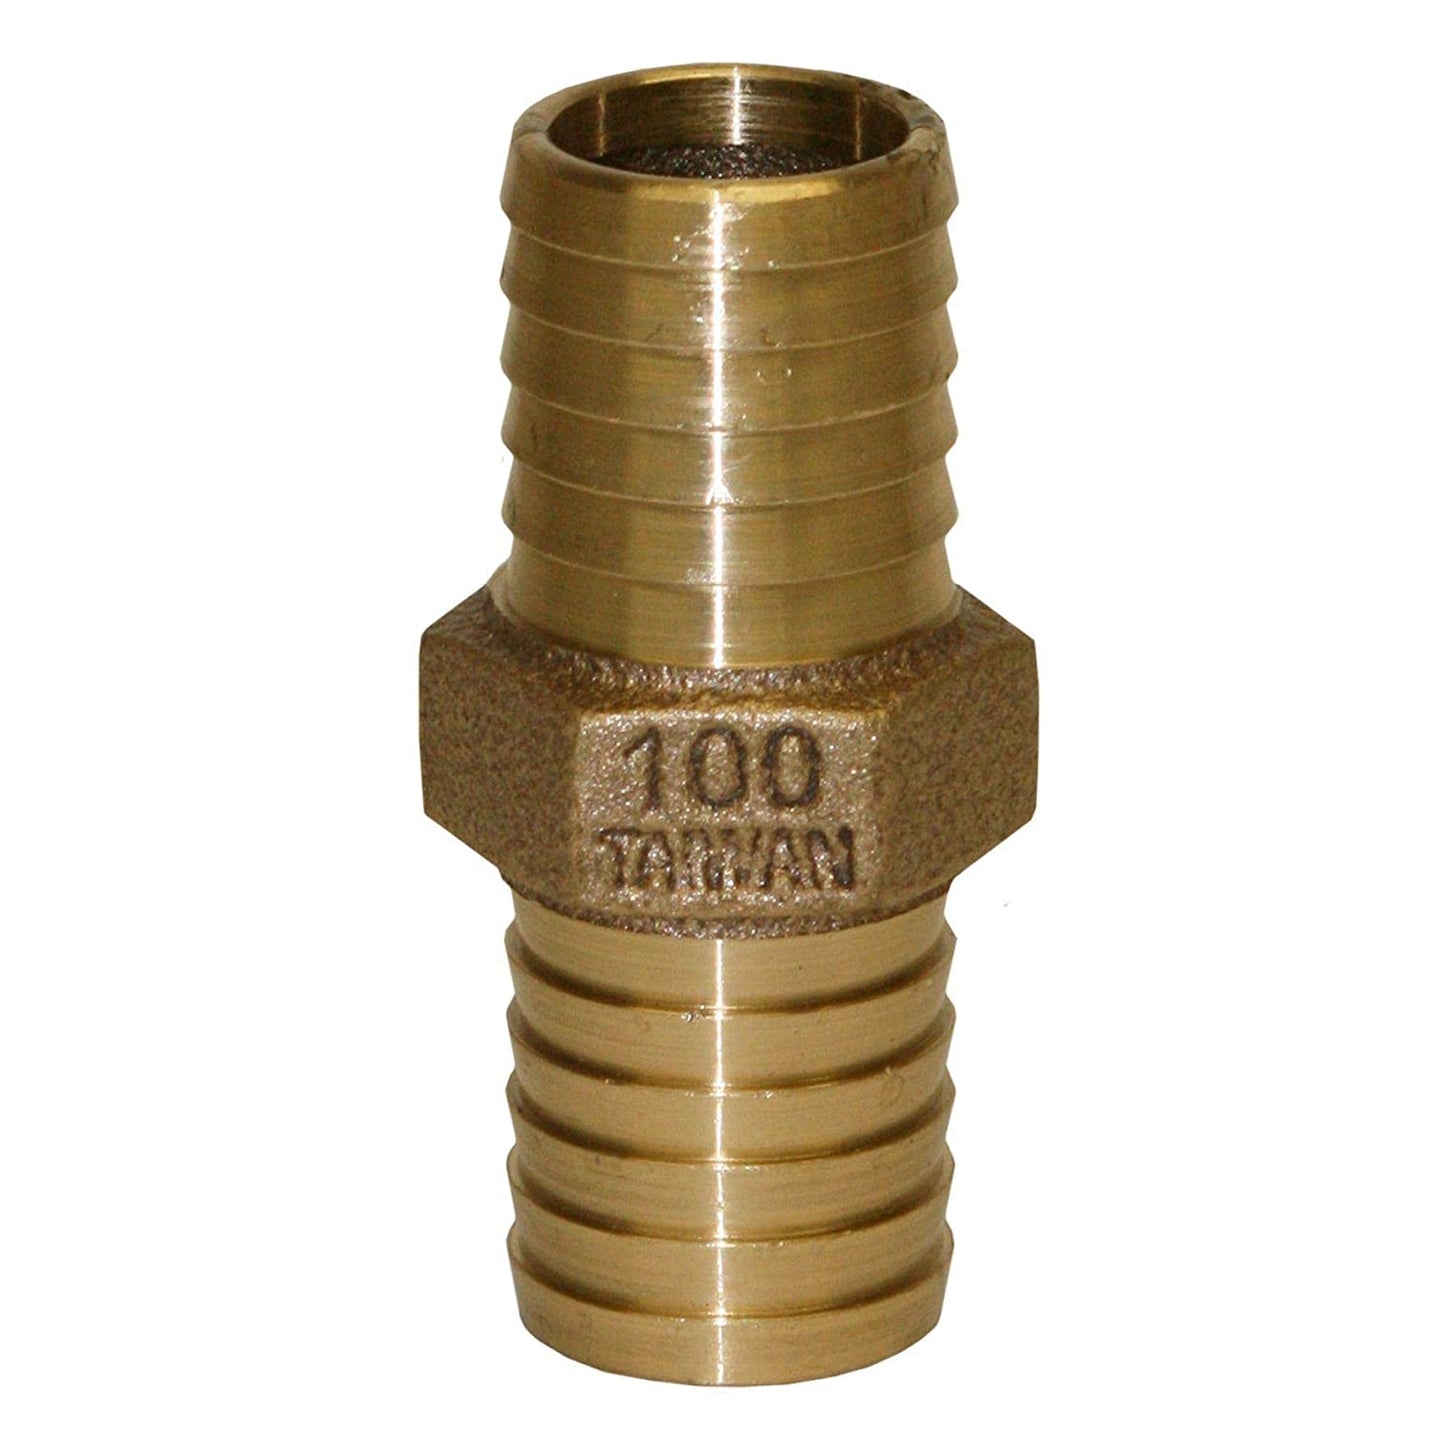 RBCPNL100 - 1" No-Lead Bronze Insert Coupling